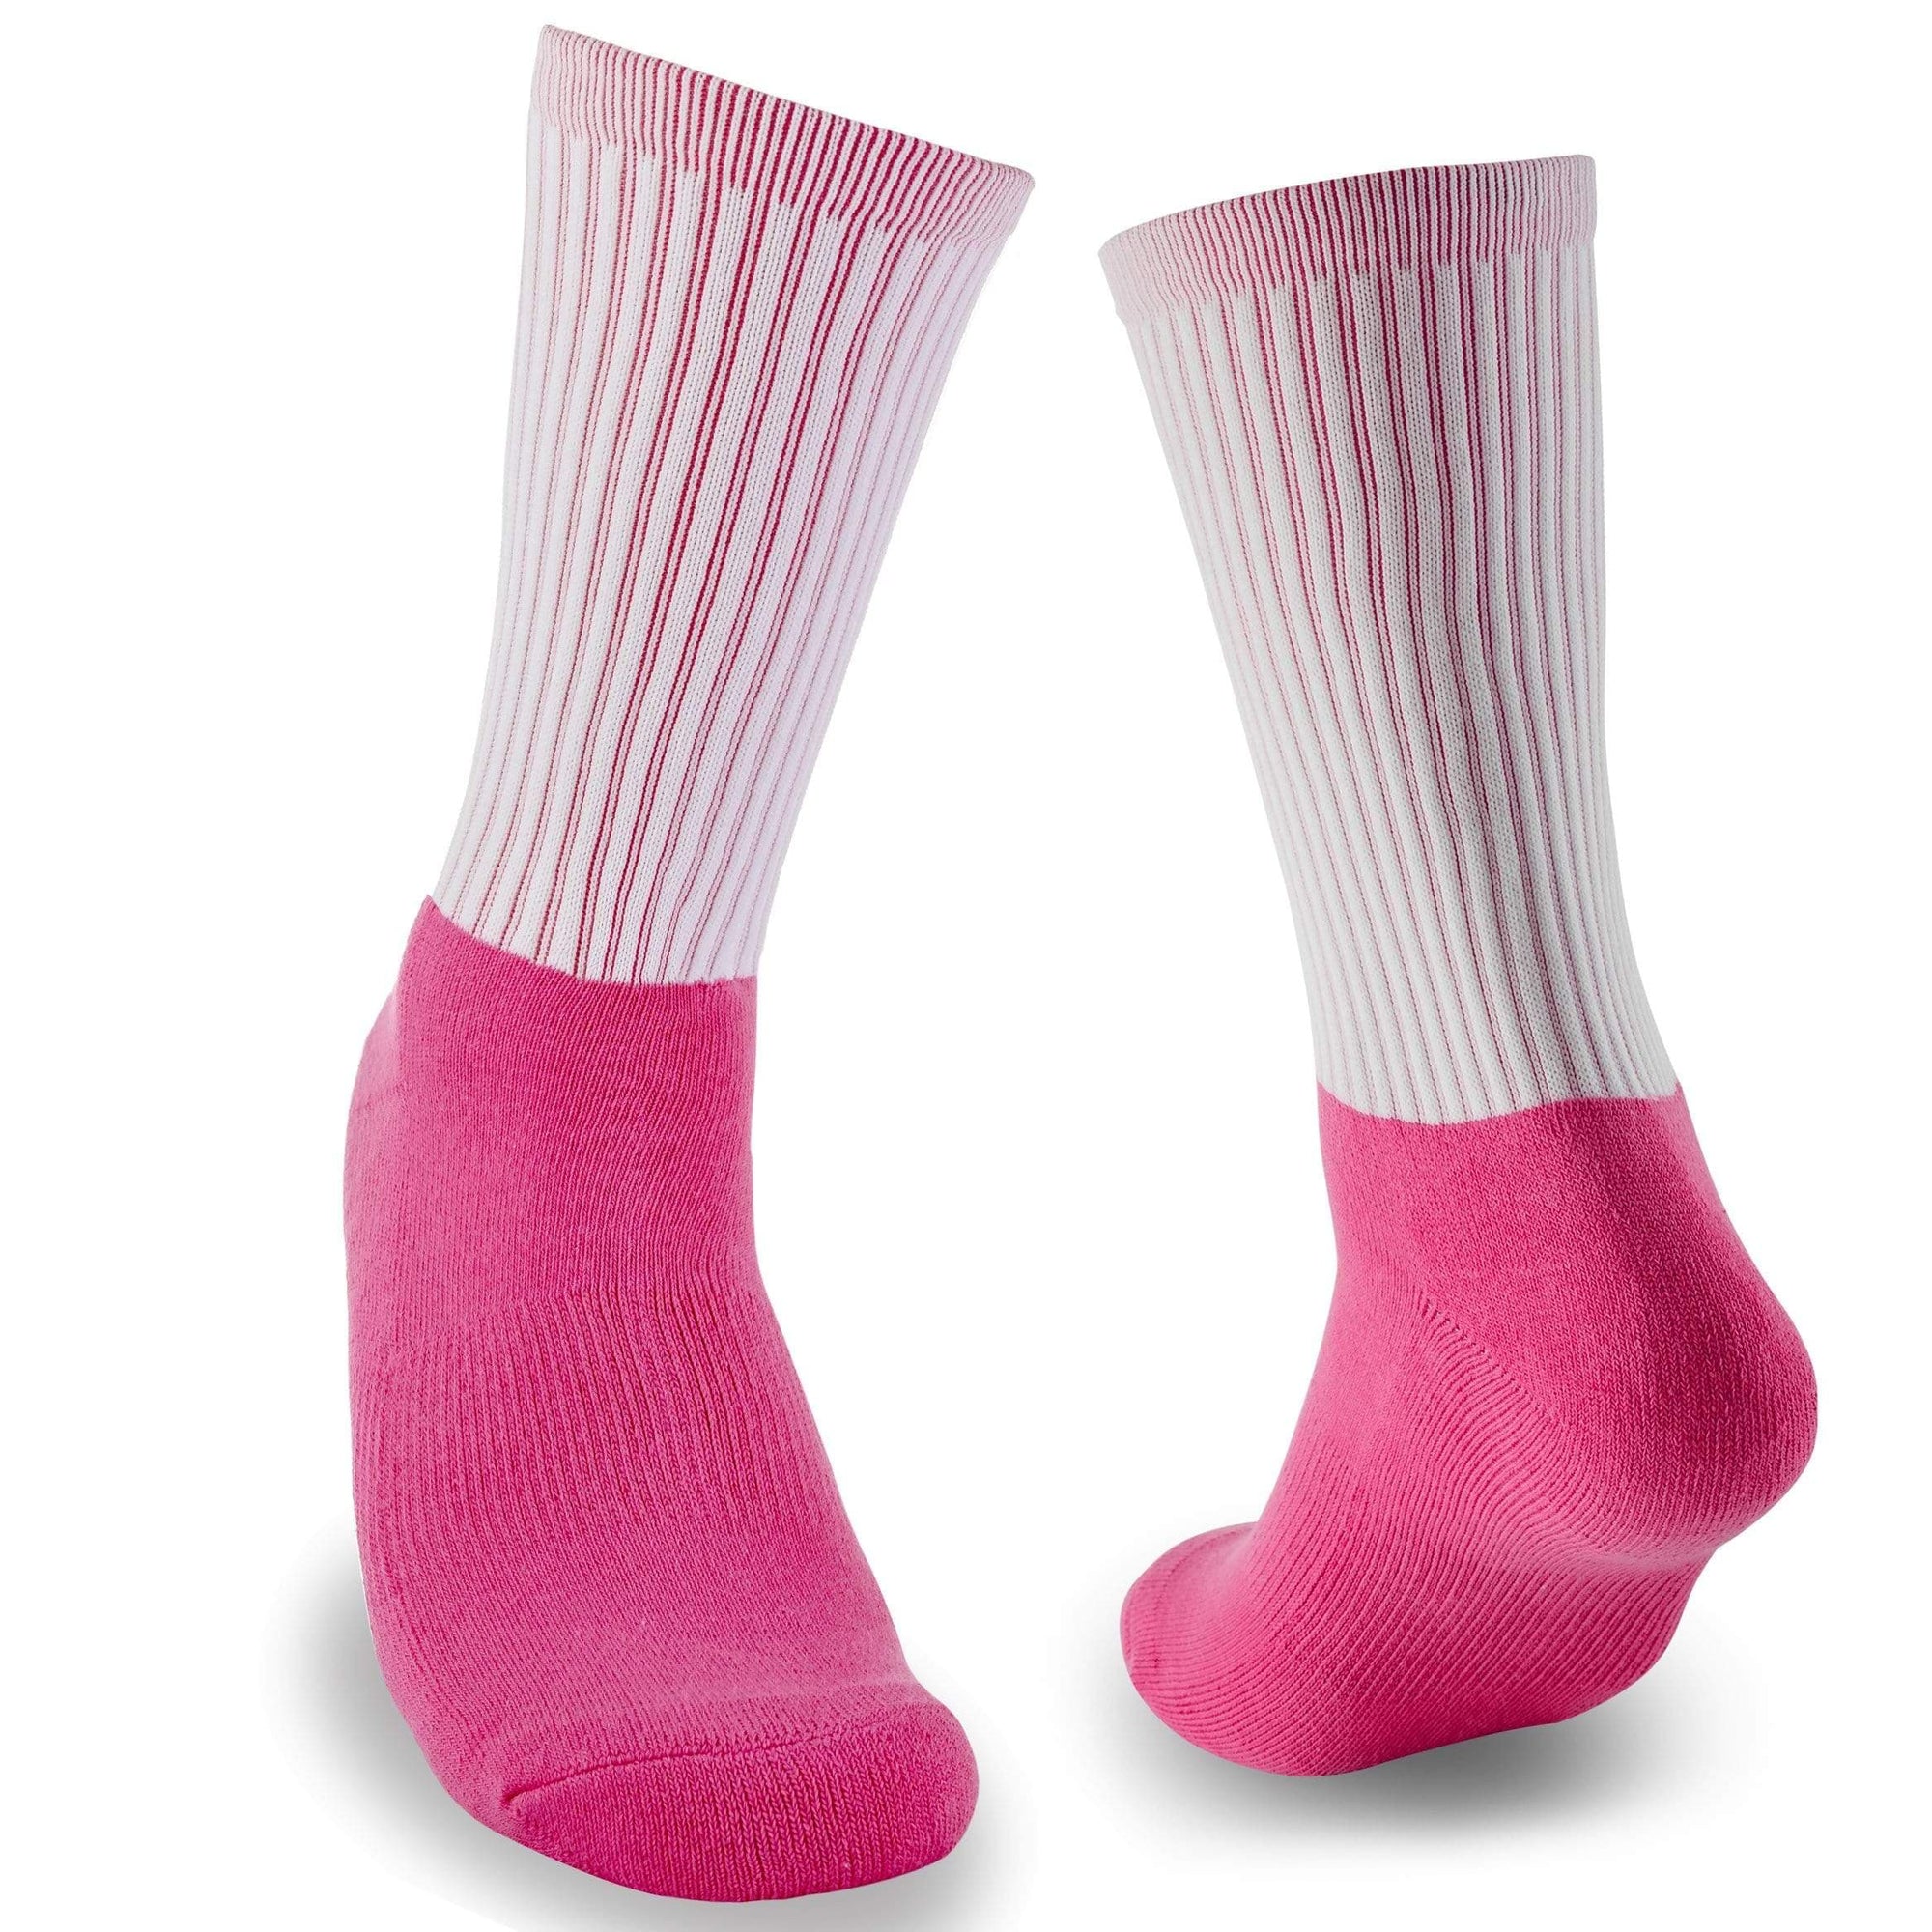 Sublimation Dress Socks by Silky Socks